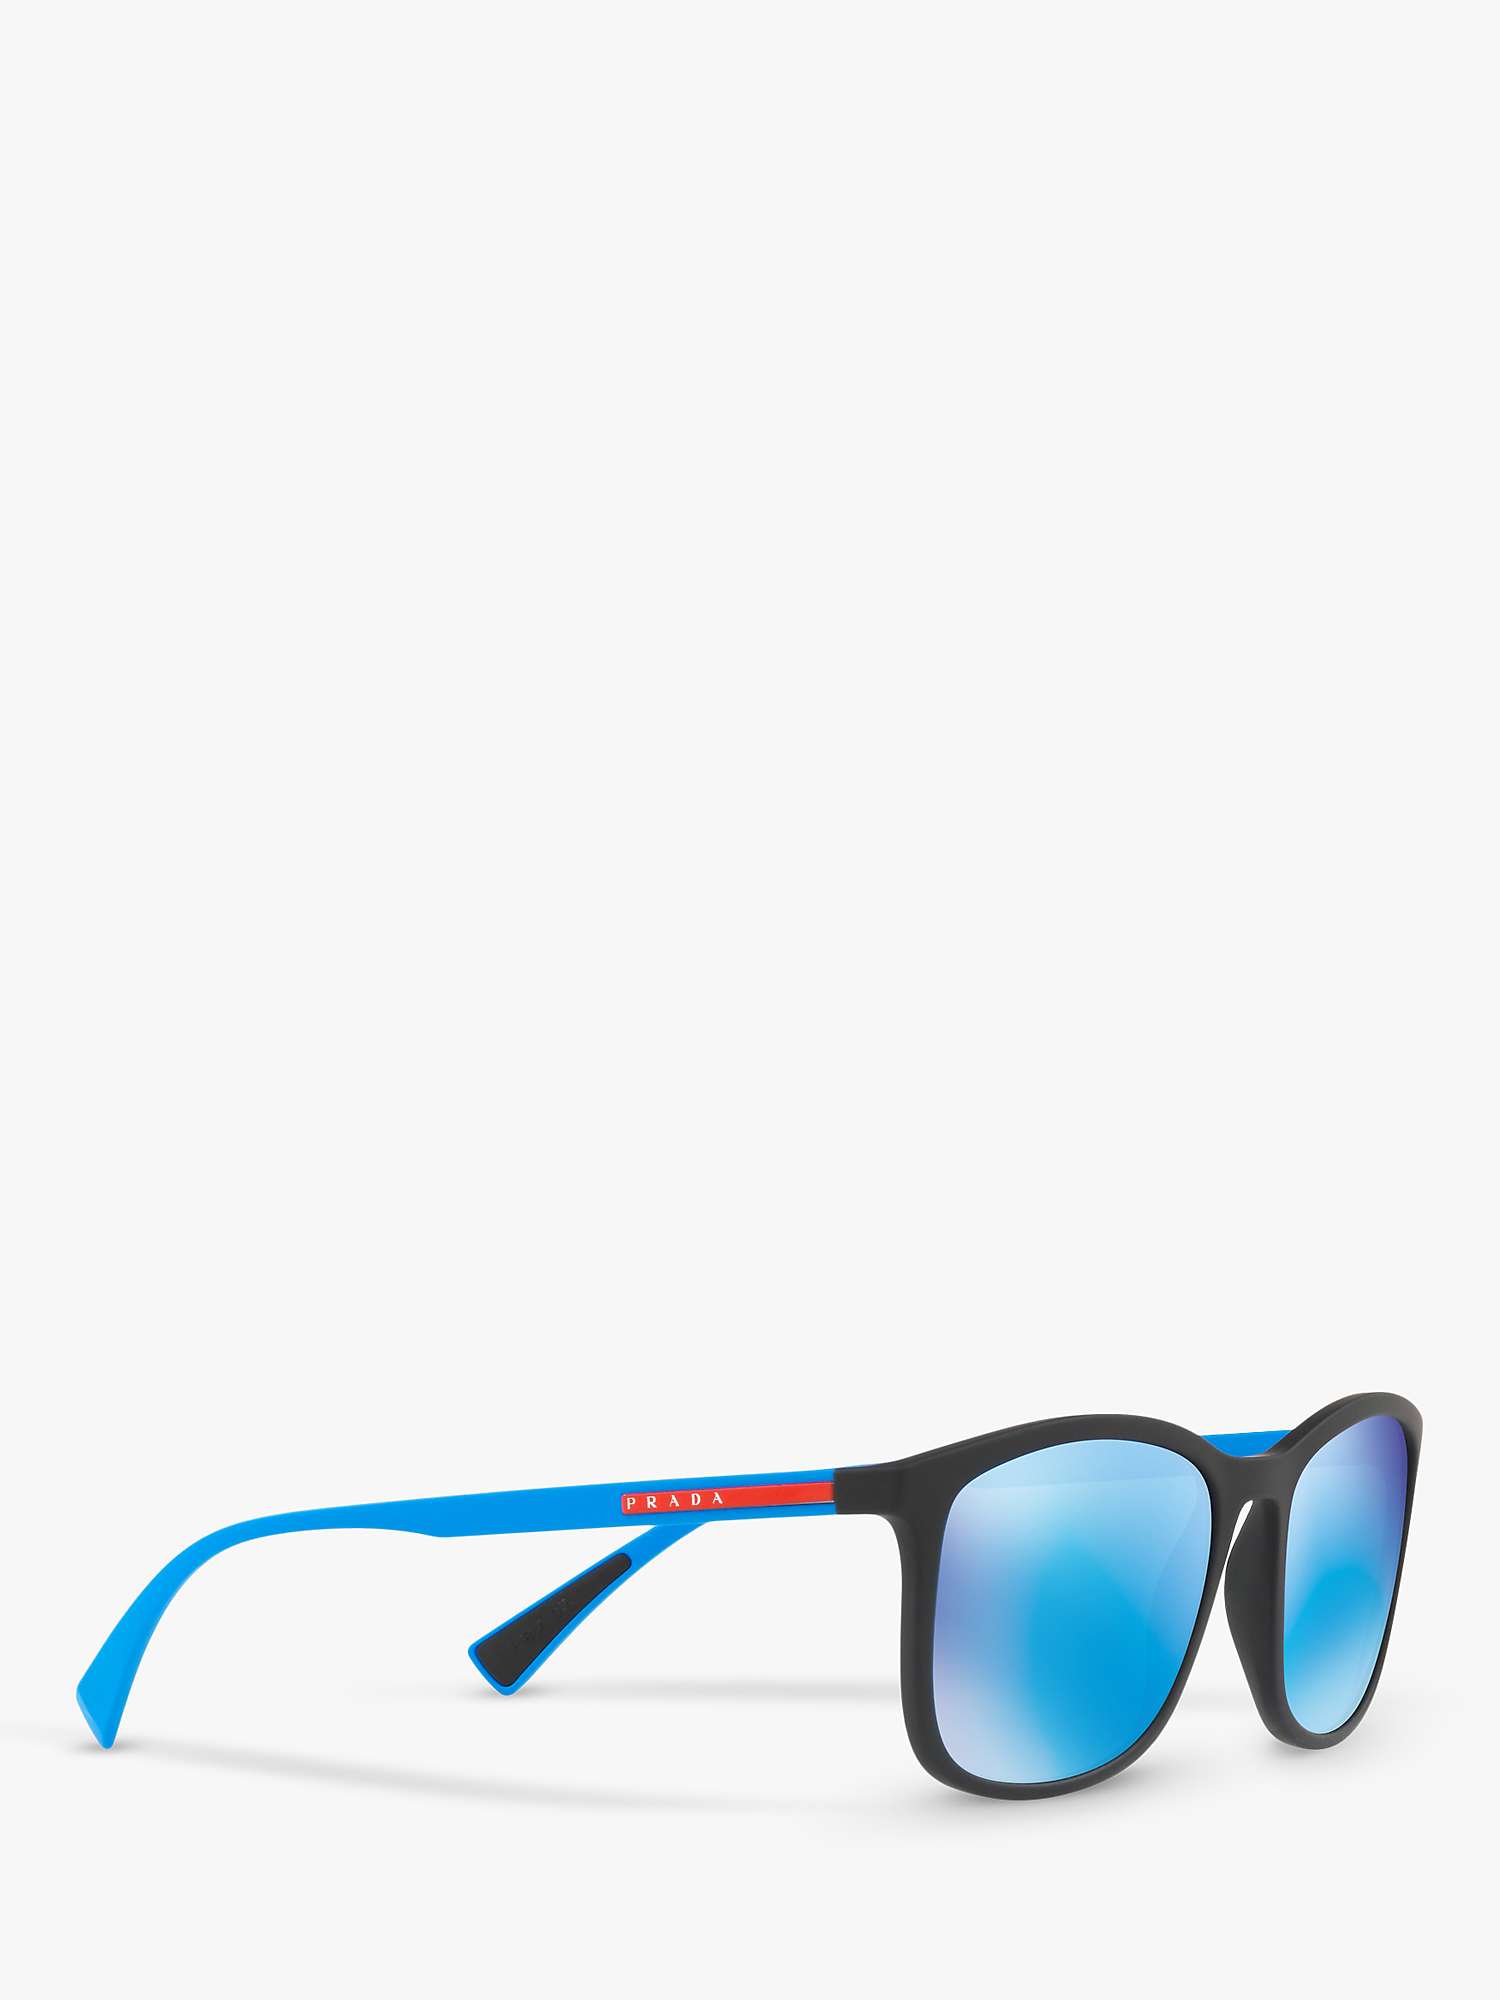 Prada Linea Rossa PS 01TS Men's Rectangular Sunglasses, Black Blue